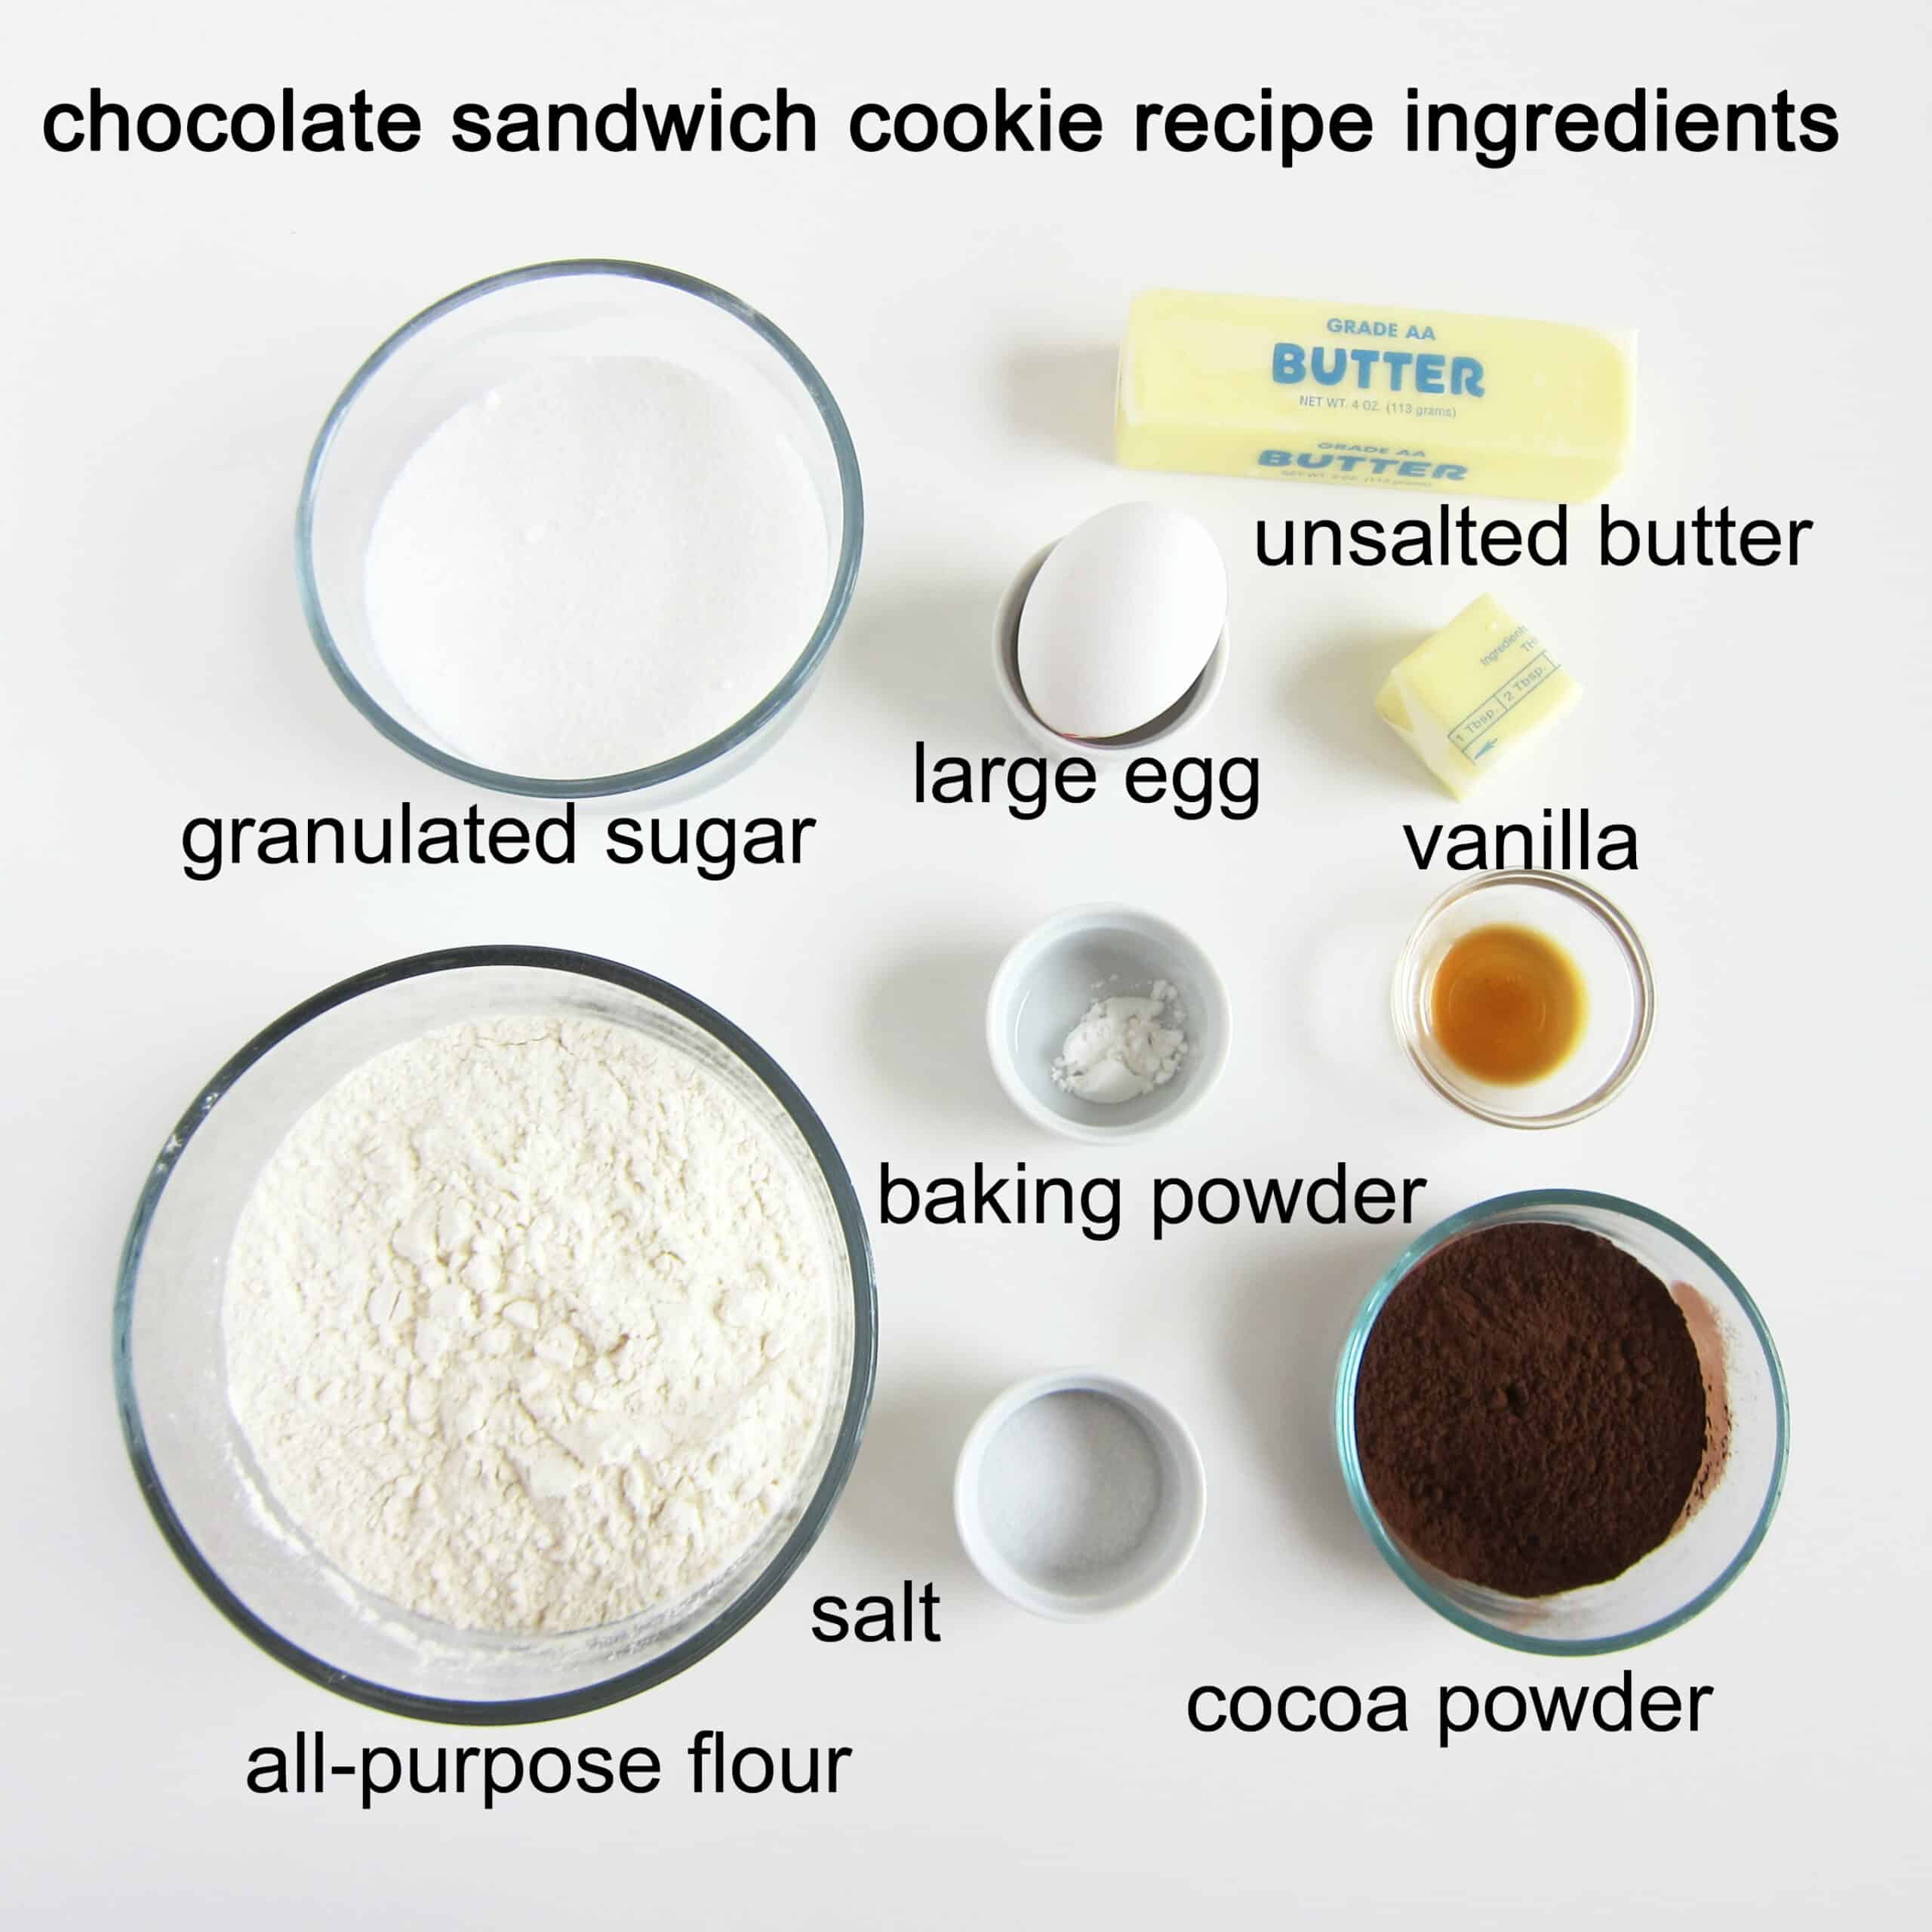 chocolate sandwich cookie recipe ingredients including sugar, butter, egg, vanilla, flour, baking powder, salt, and cocoa powder